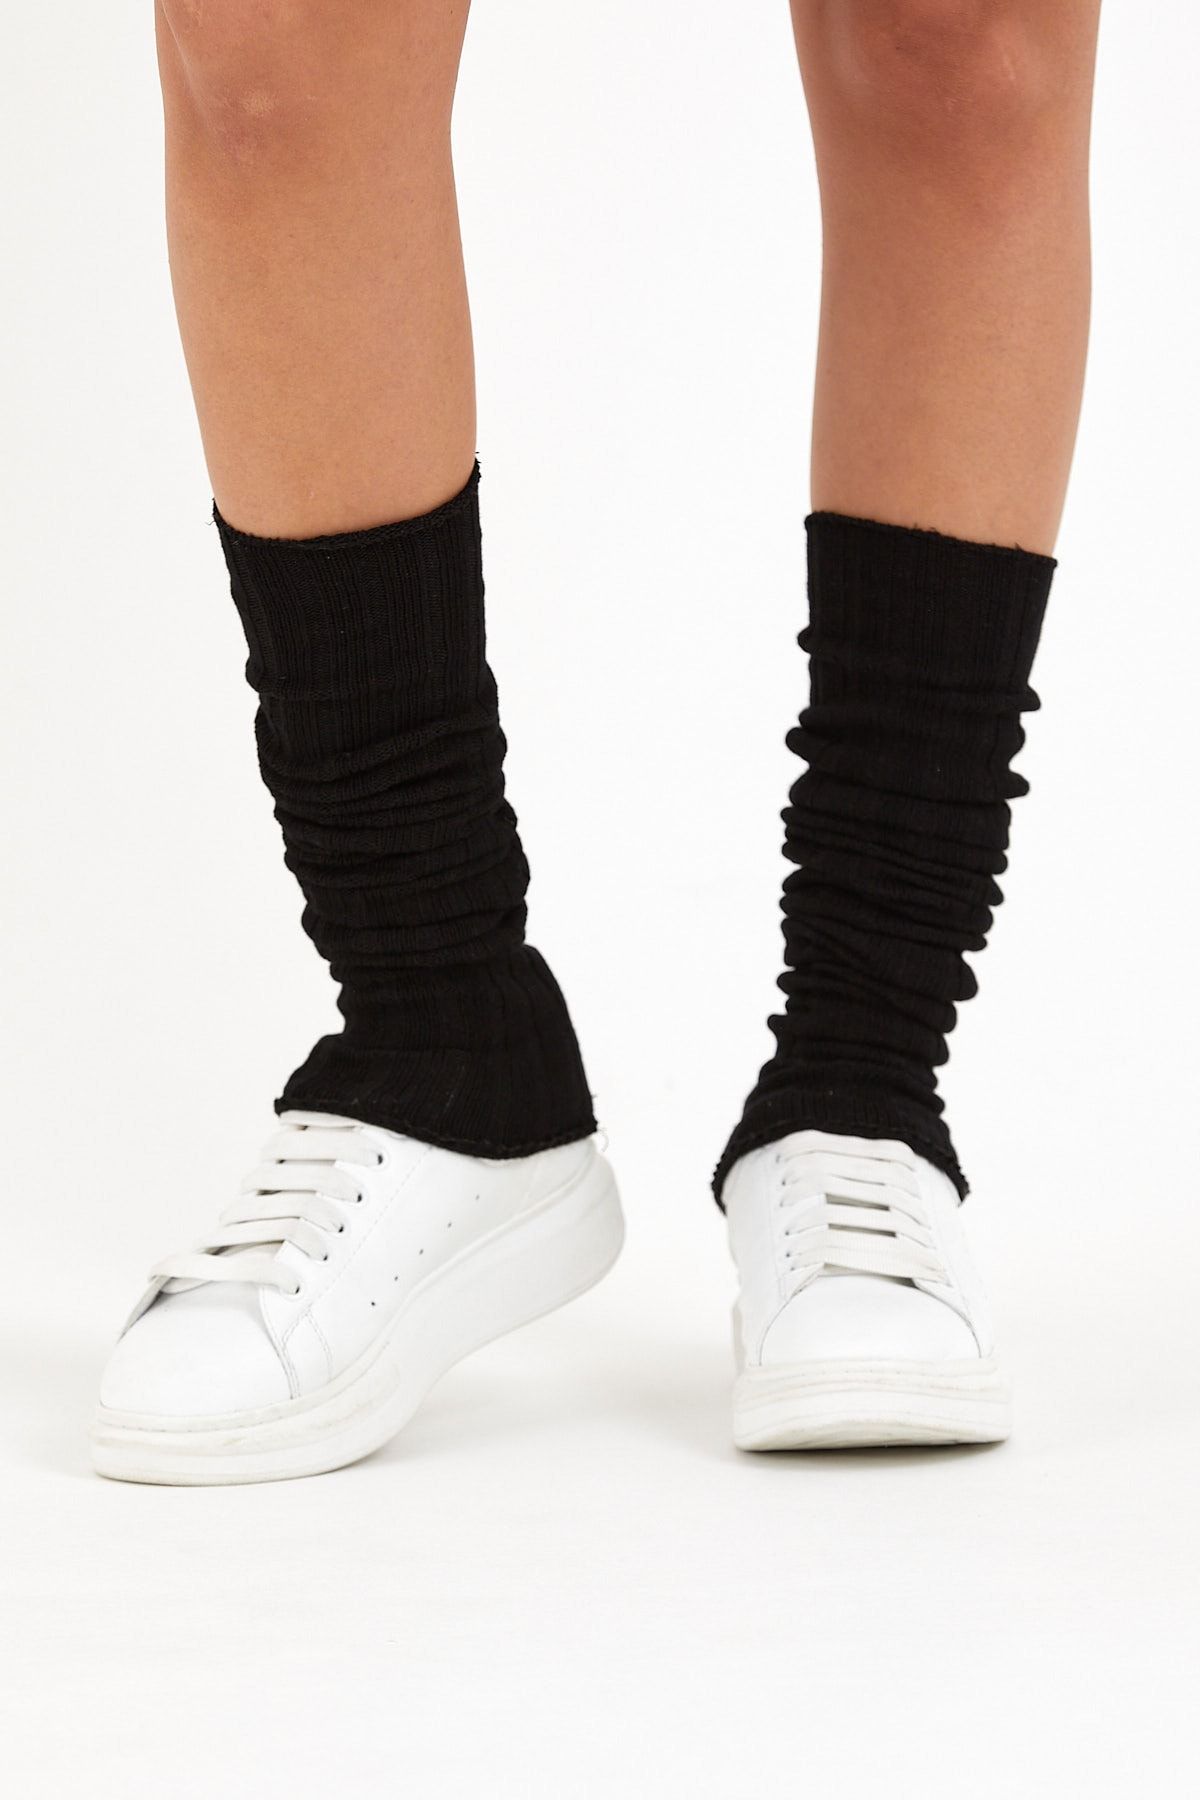 ASOS DESIGN knee high lace socks in black